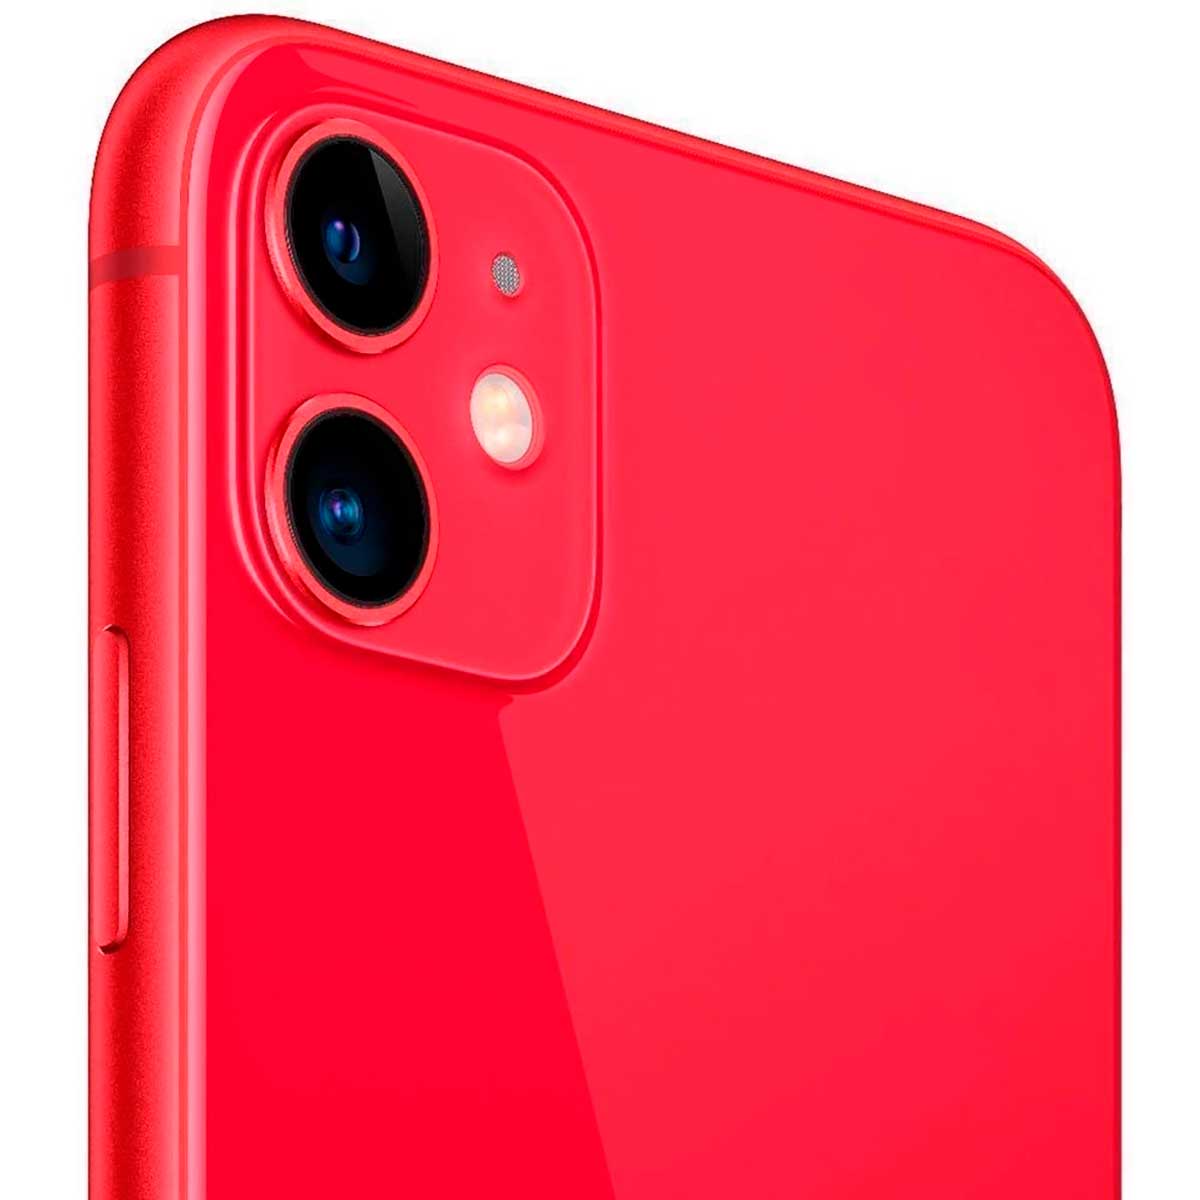 smartphone-apple-iphone-11-64gb-vermelho-4g-6.1--liquid-retina-hd-camera-dupla-12mp-selfie-12mp-ios-15-3.jpg